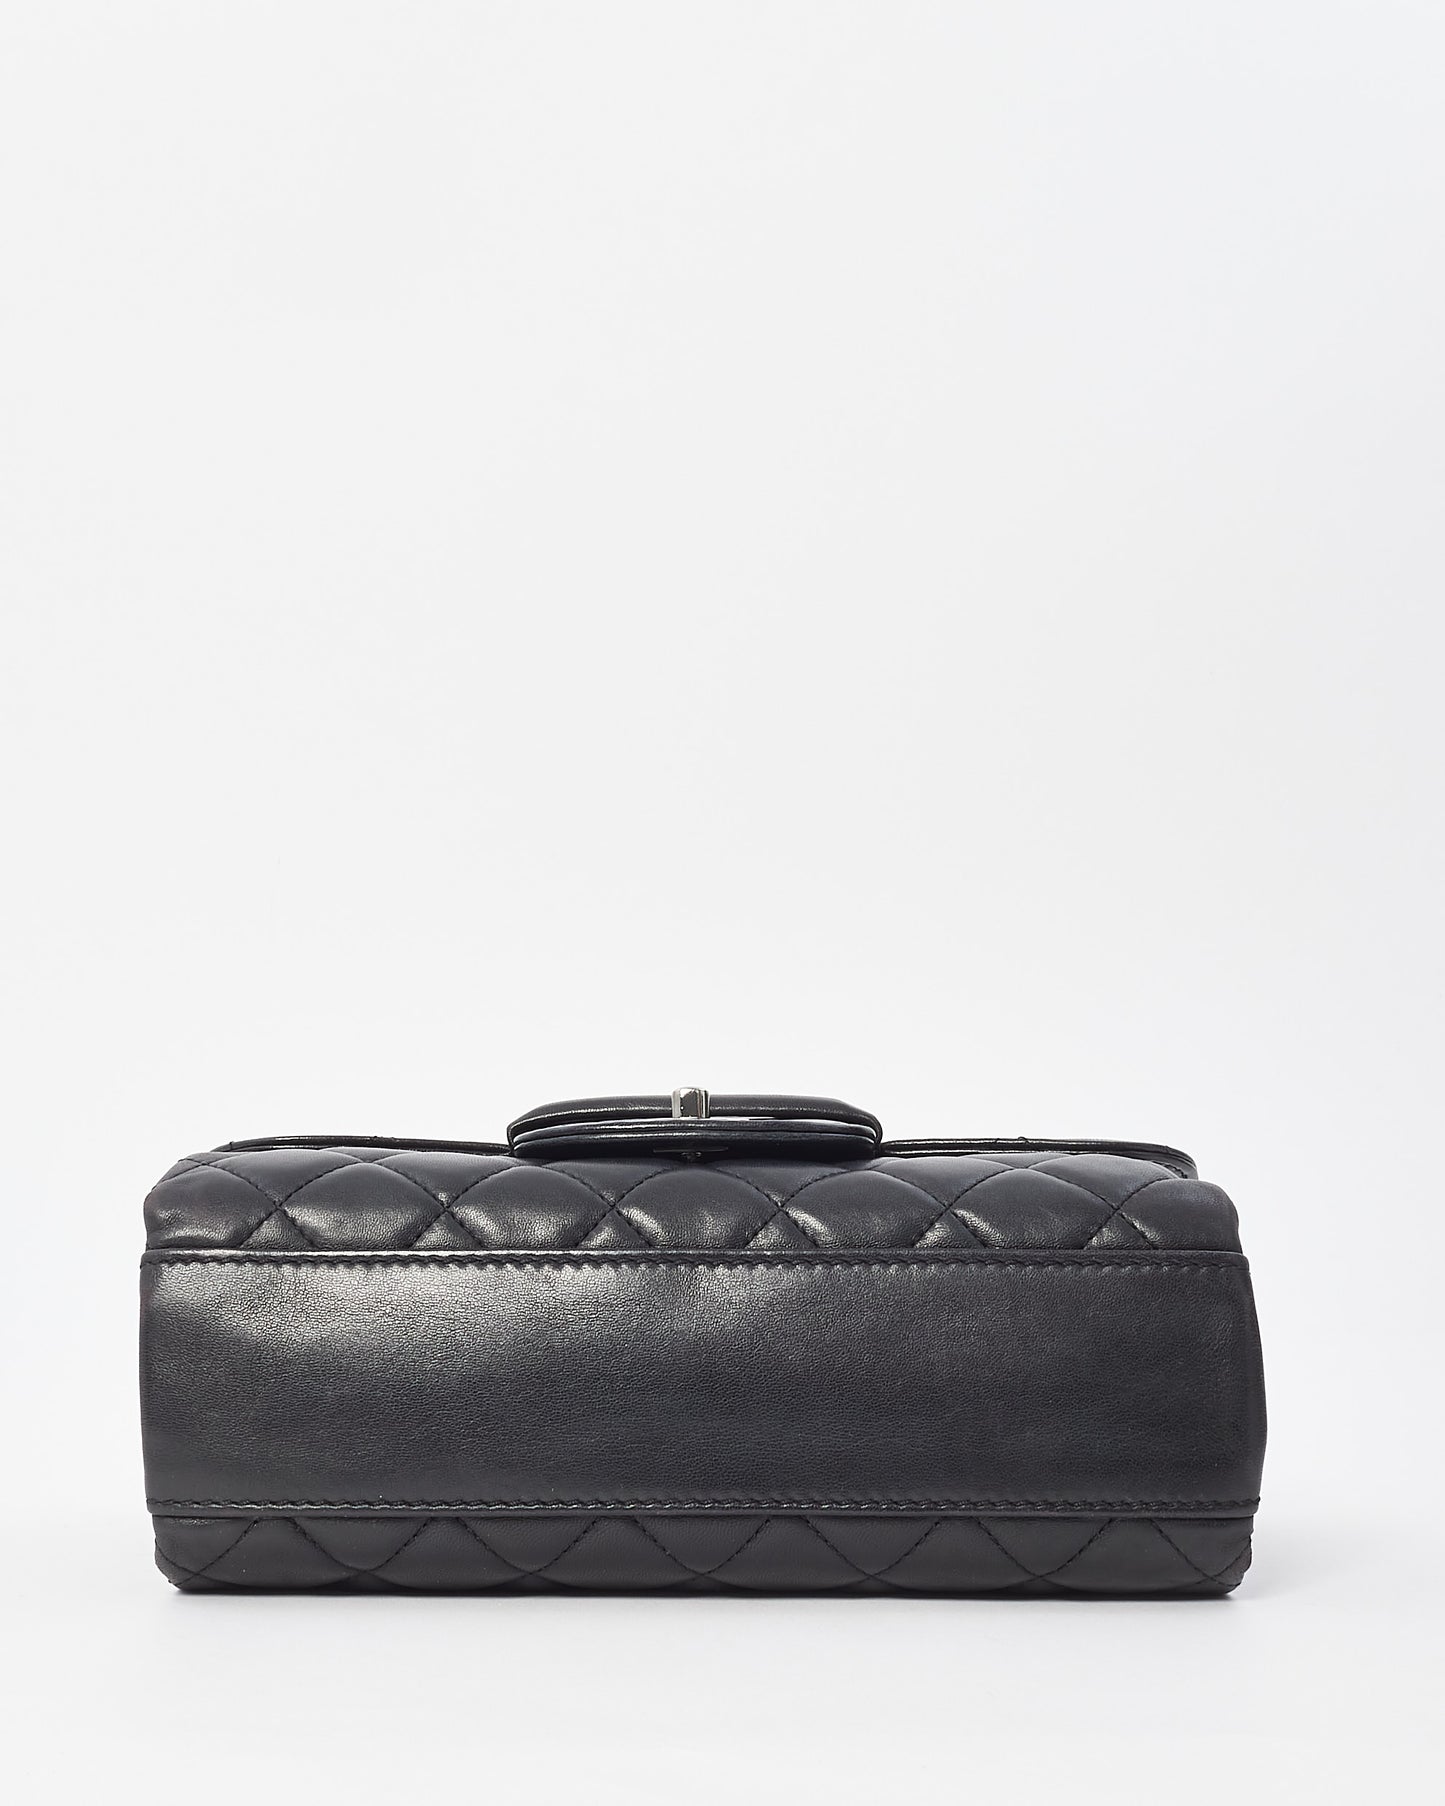 Chanel Black Lambskin Single Flap Coco Loop Shoulder Bag